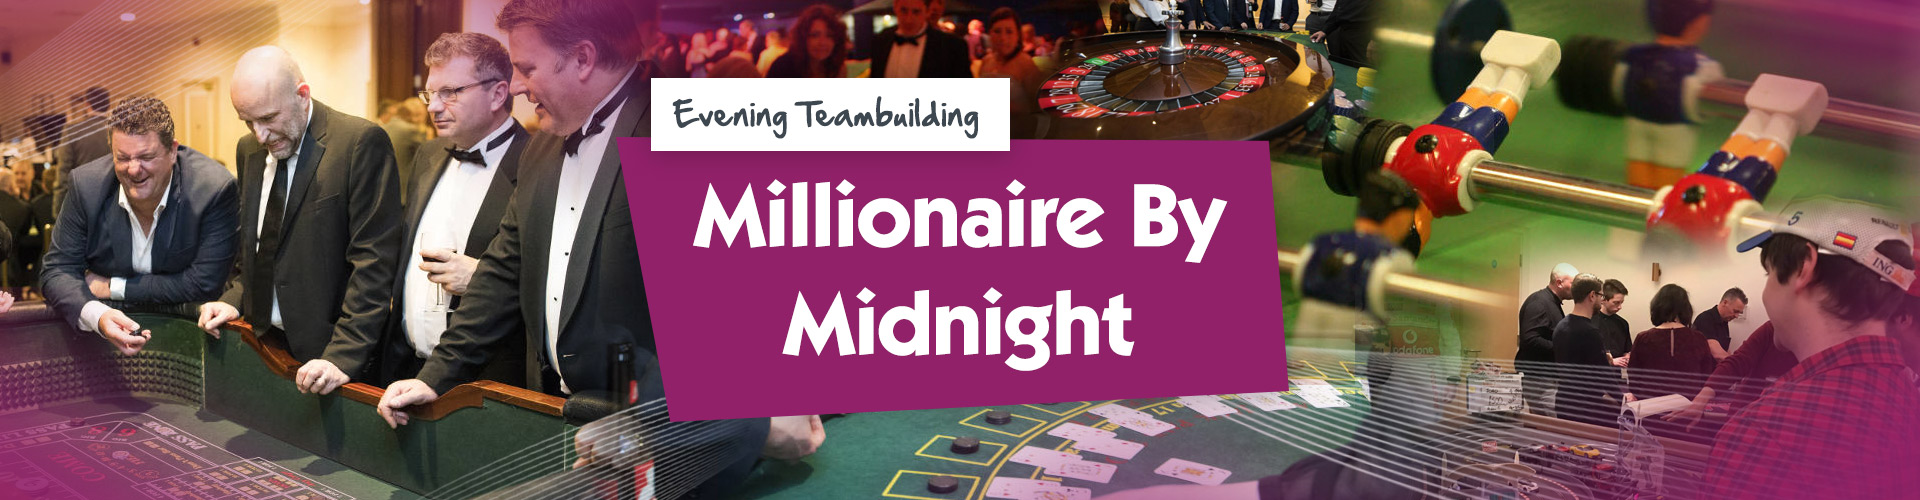 Teambuilding | Millionaire By Midnight